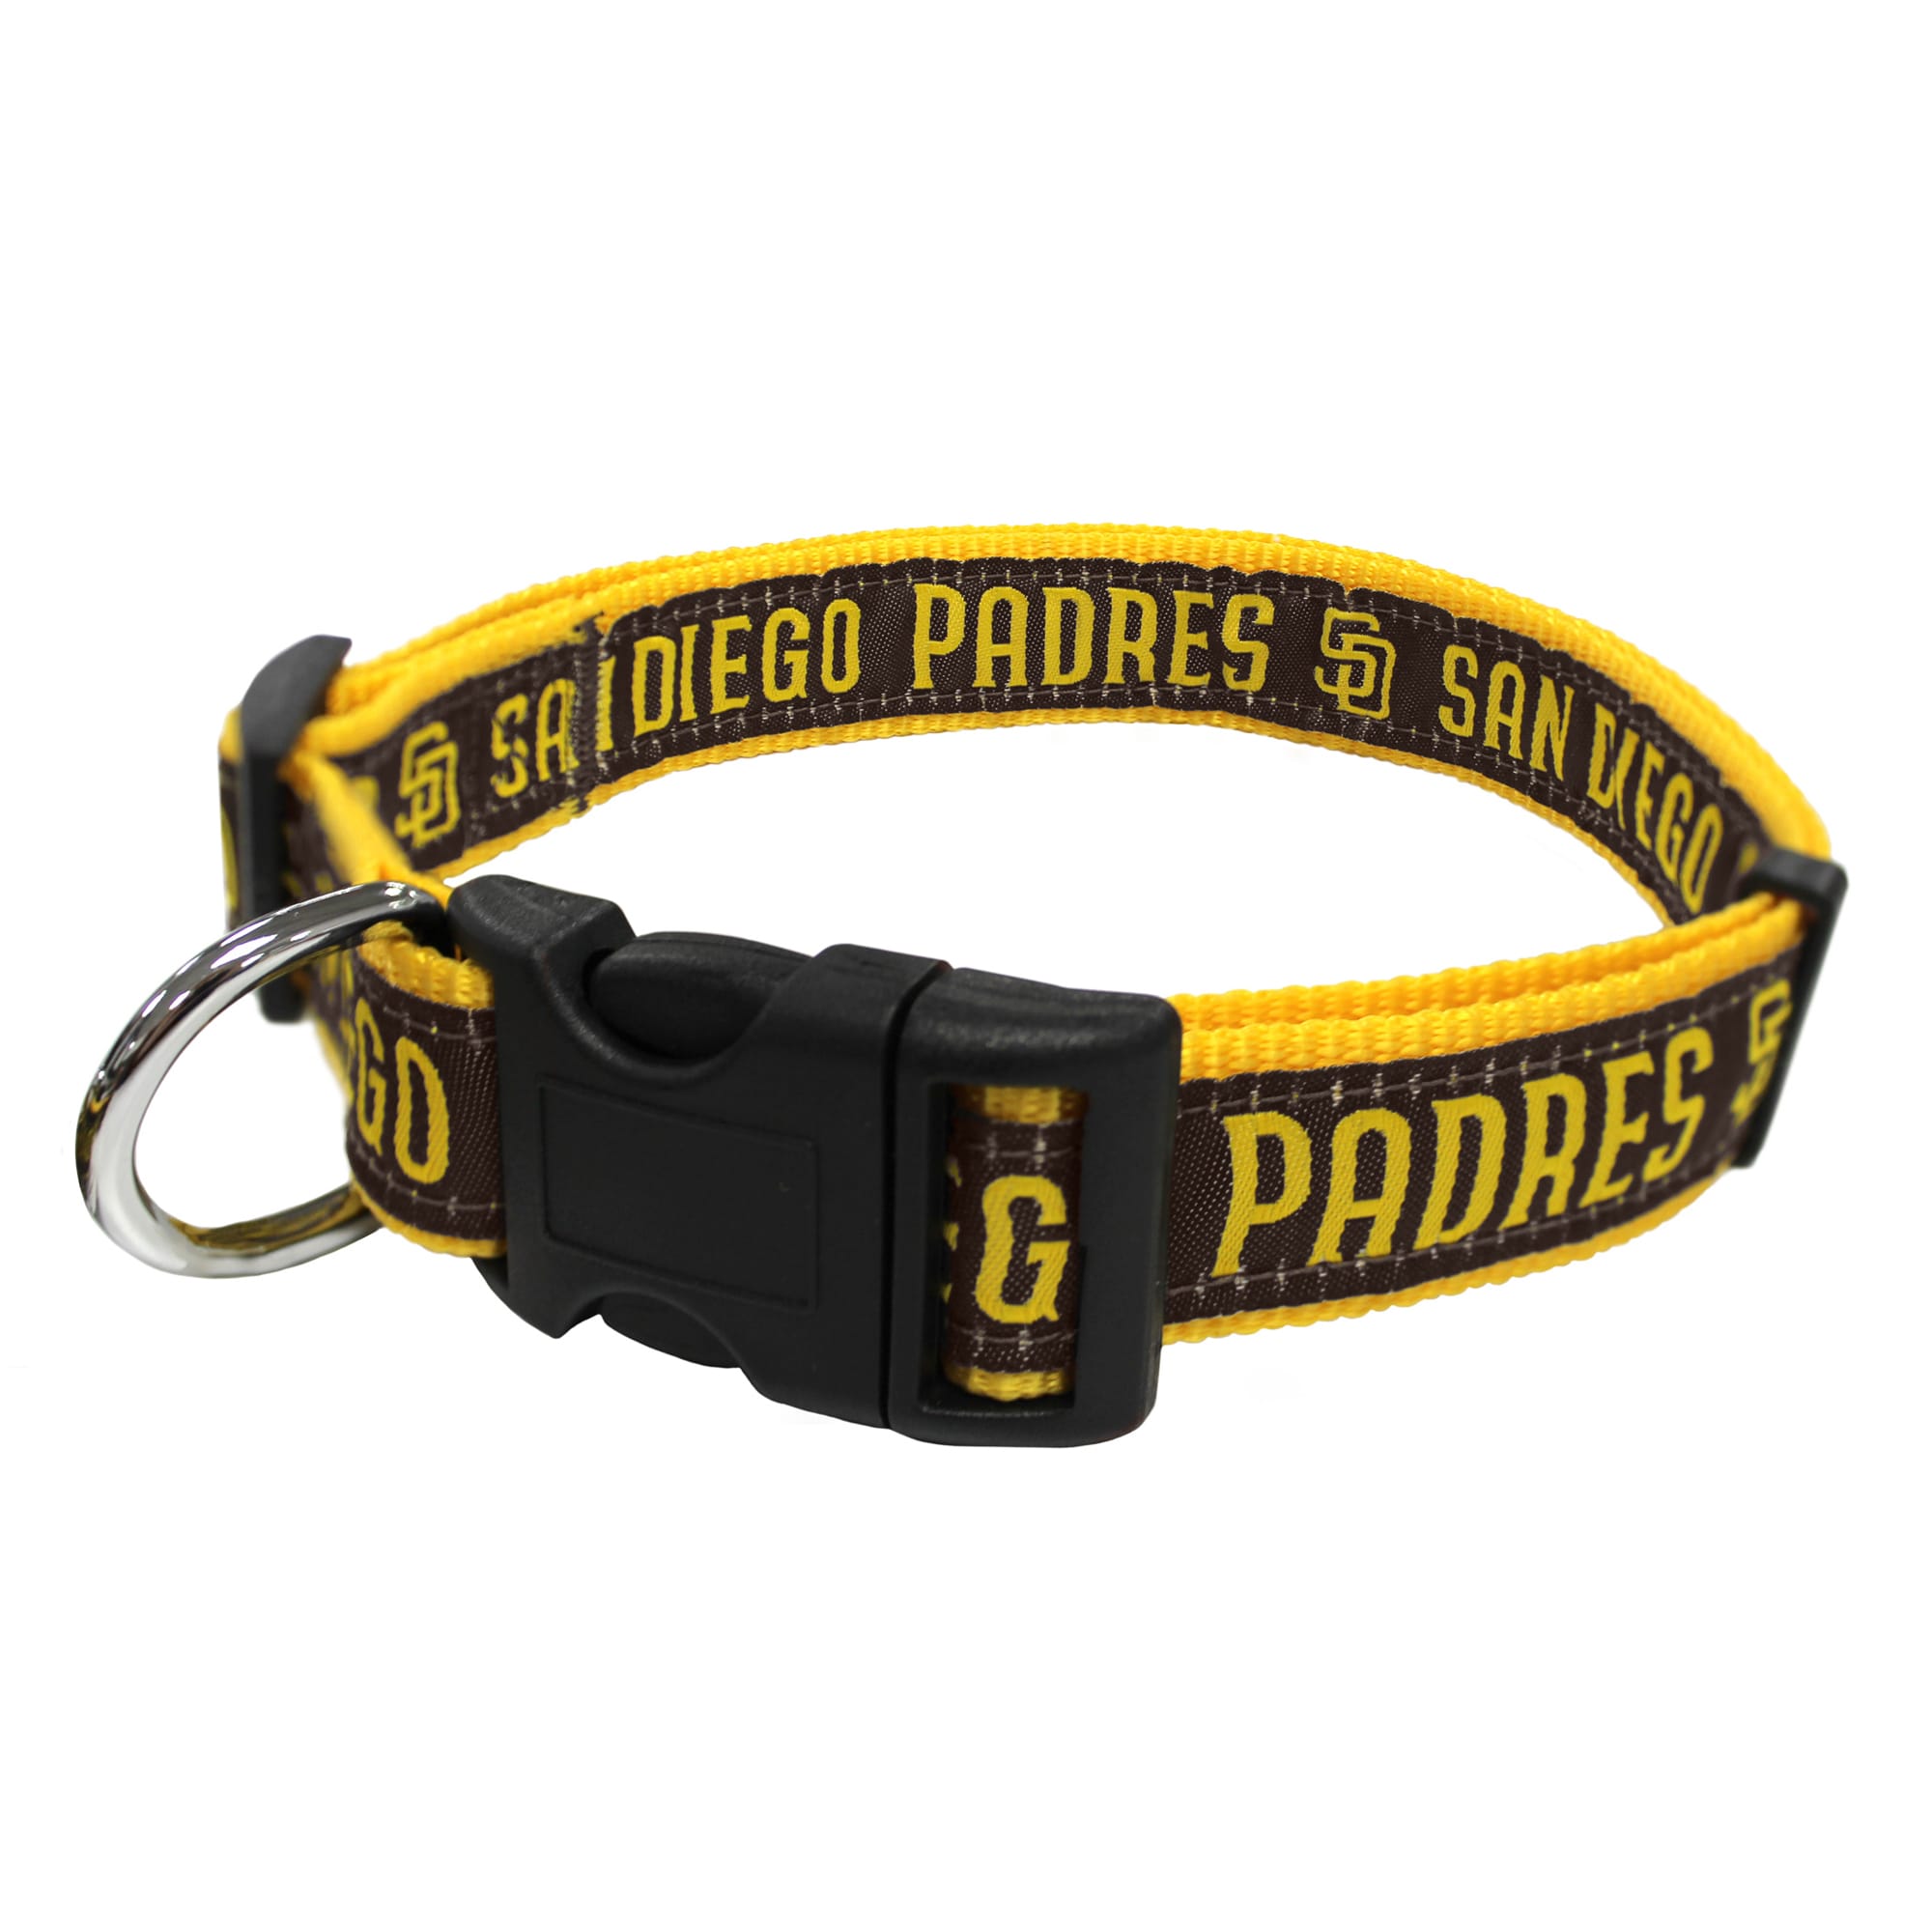 San Diego Padres Pet Gear